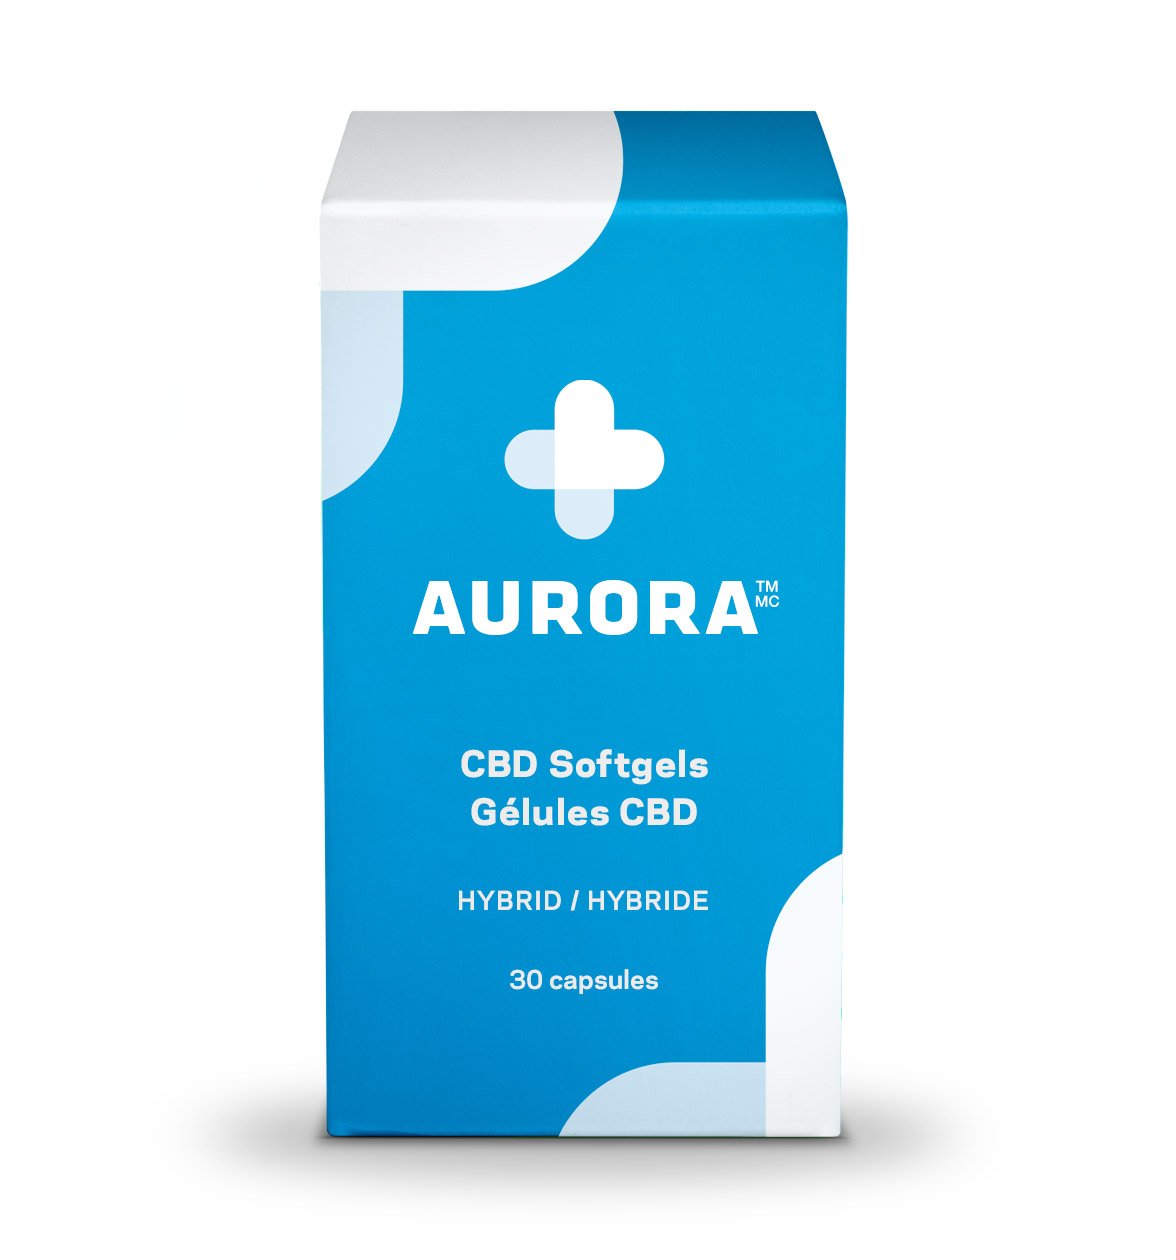 Aurora CBD Softgels